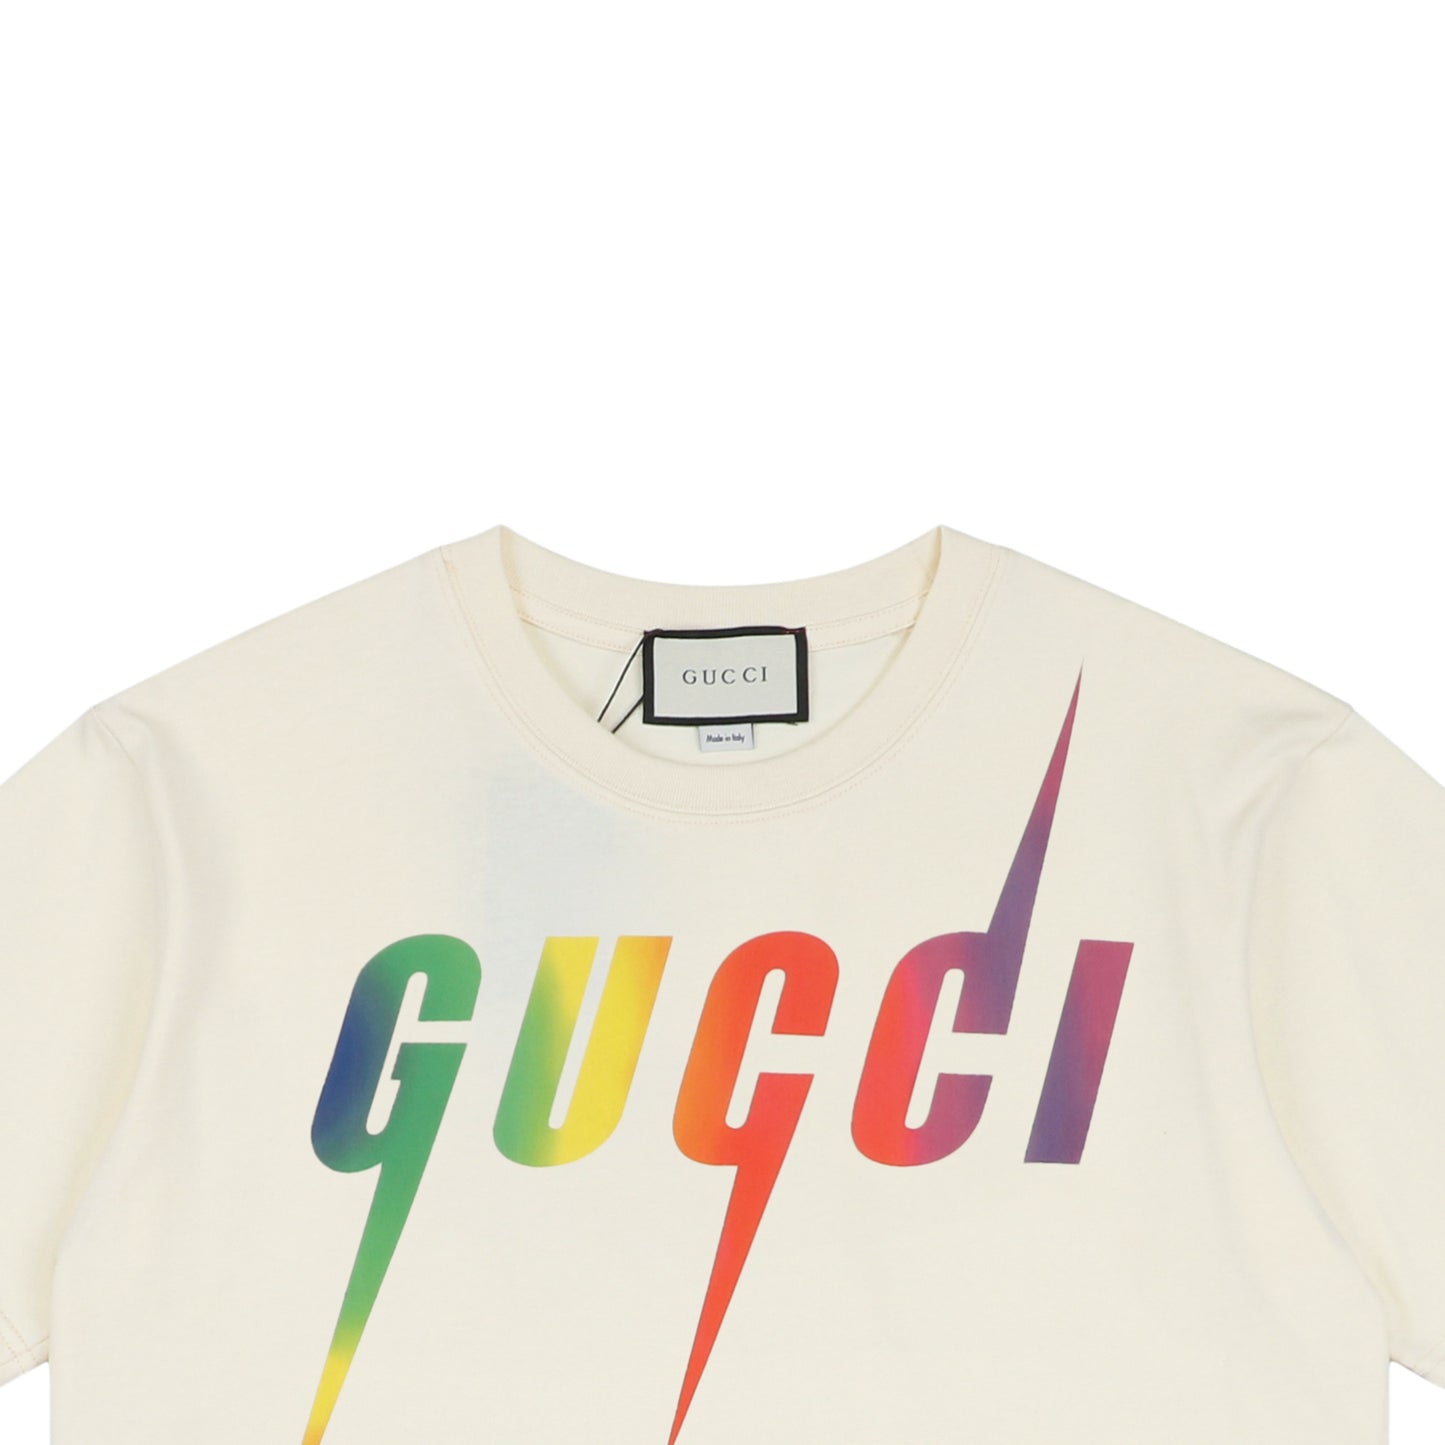 Gucc1 T-Shirt Blade Print Rainbow White